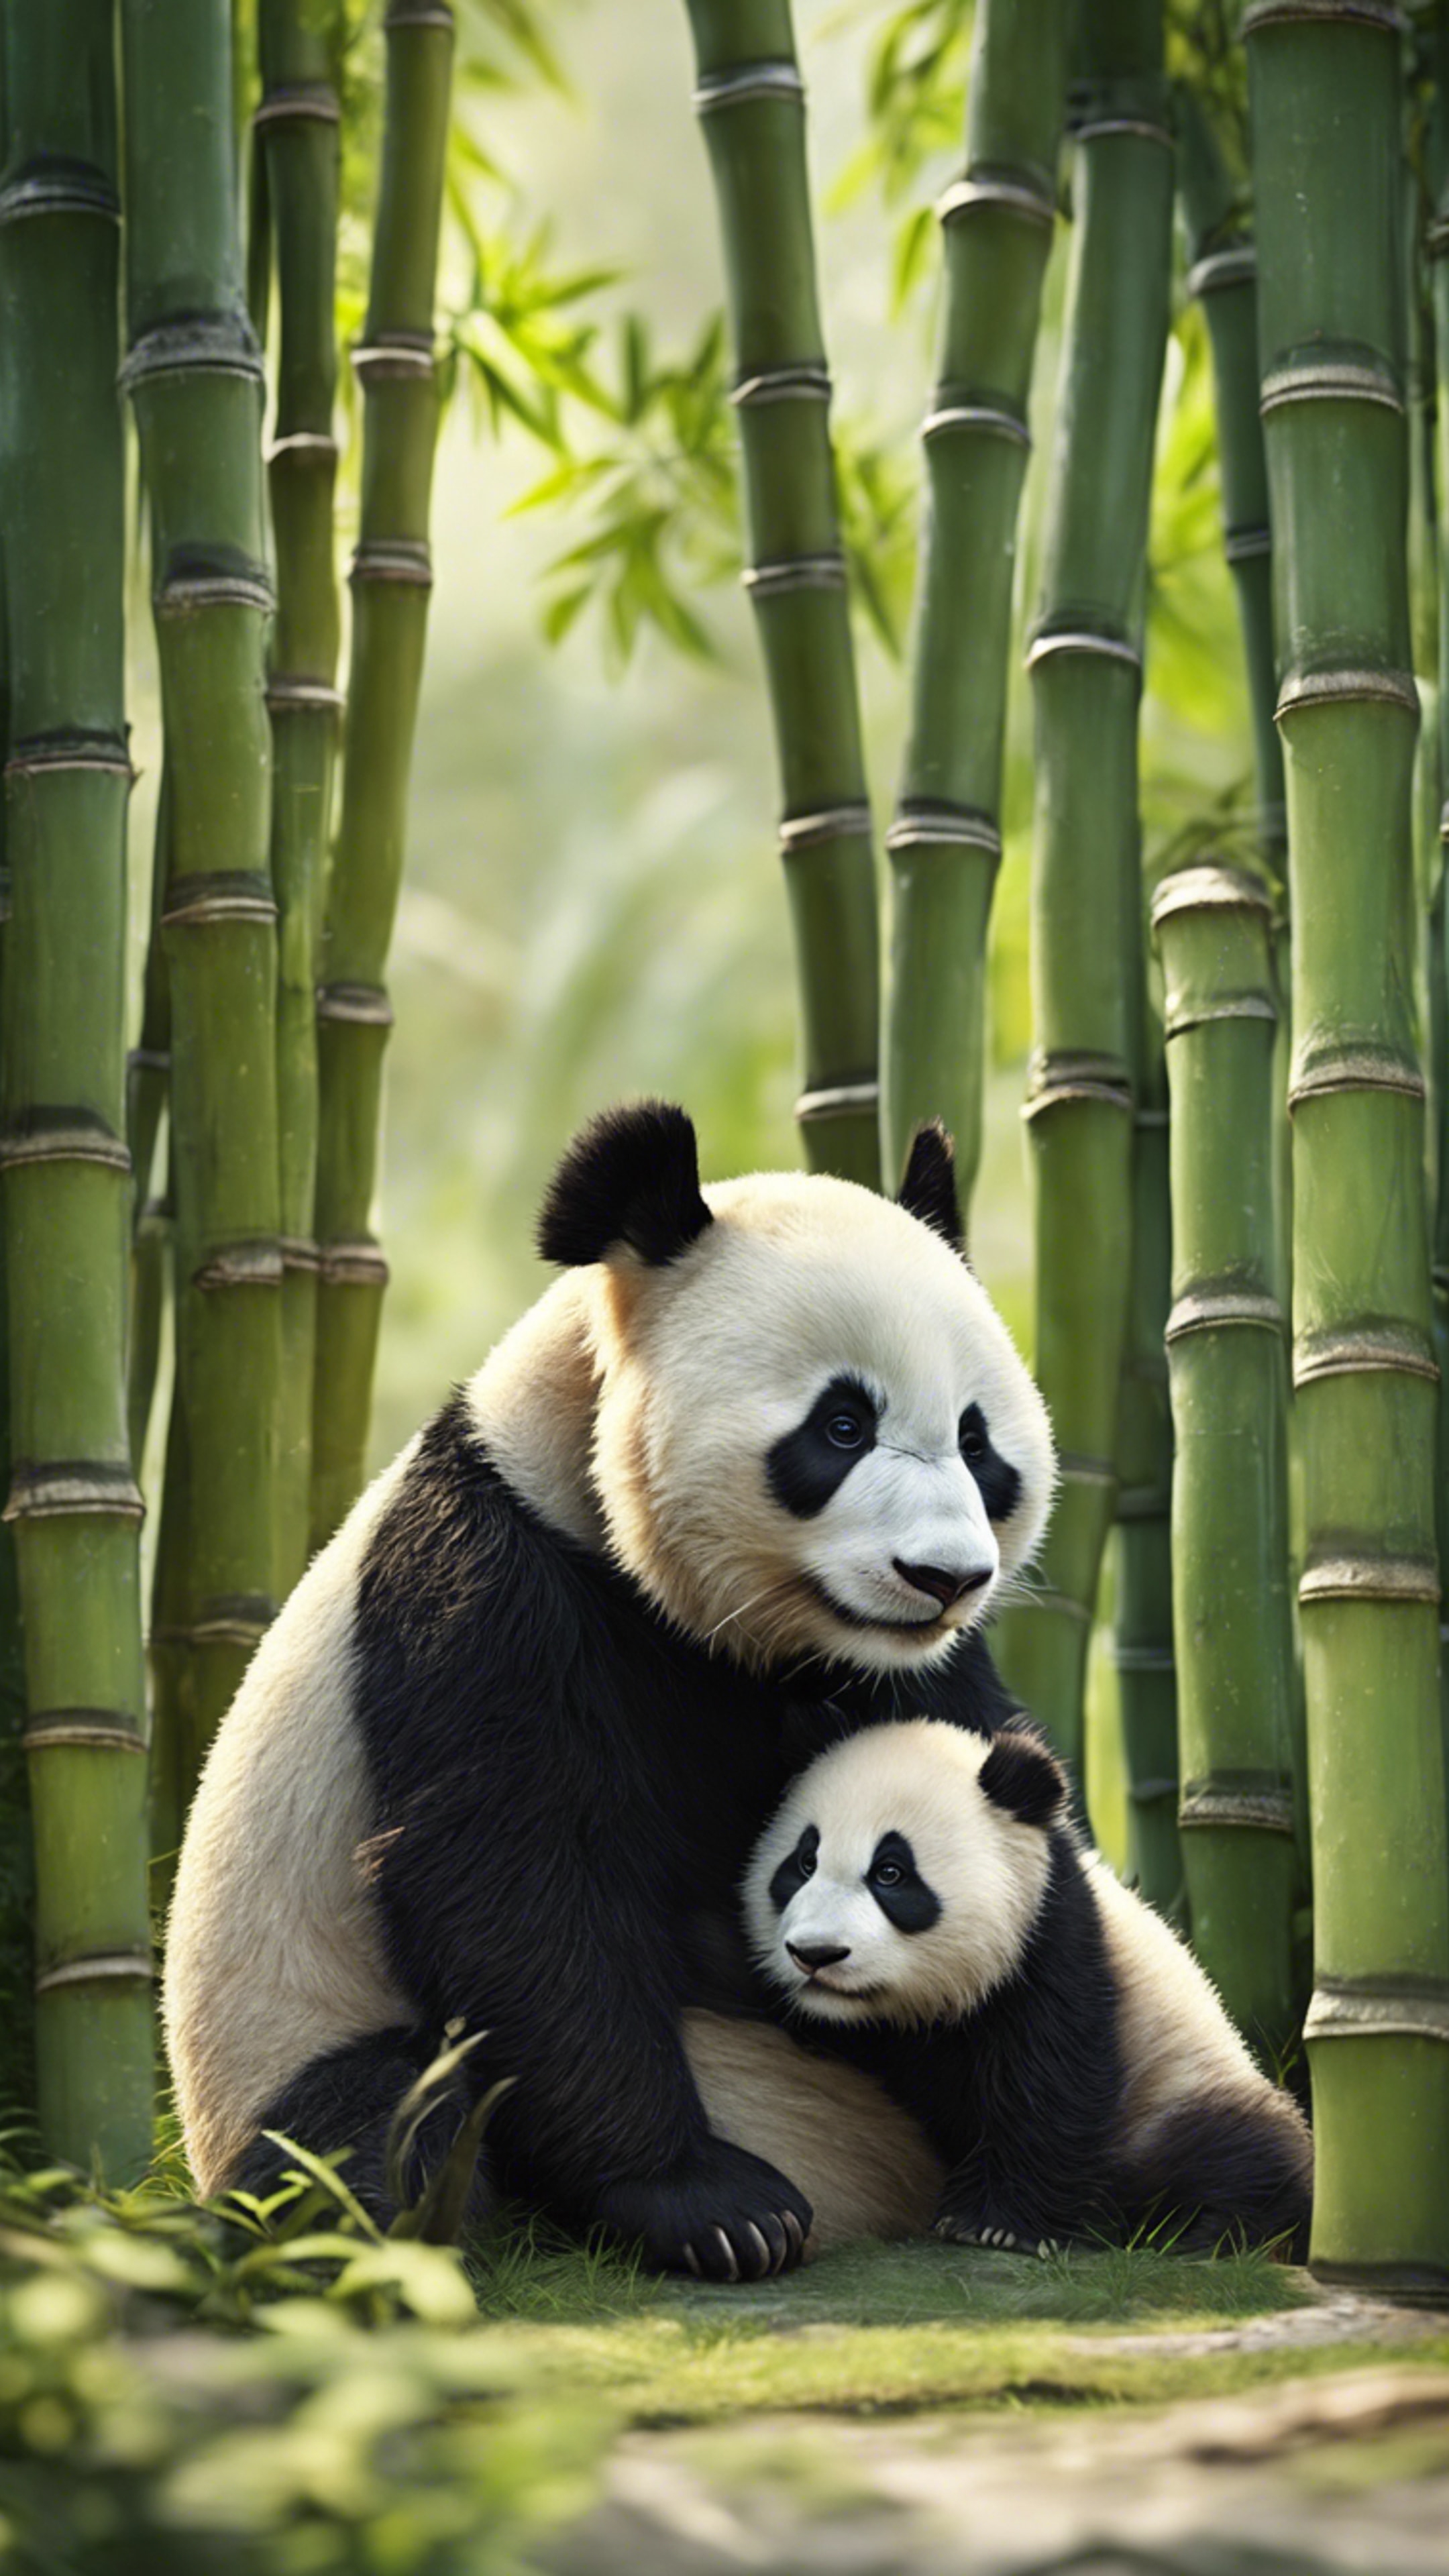 A mother panda teaching her cub to climb a bamboo tree in a tranquil jungle setting. Ფონი[bf956daca53d4d23a107]